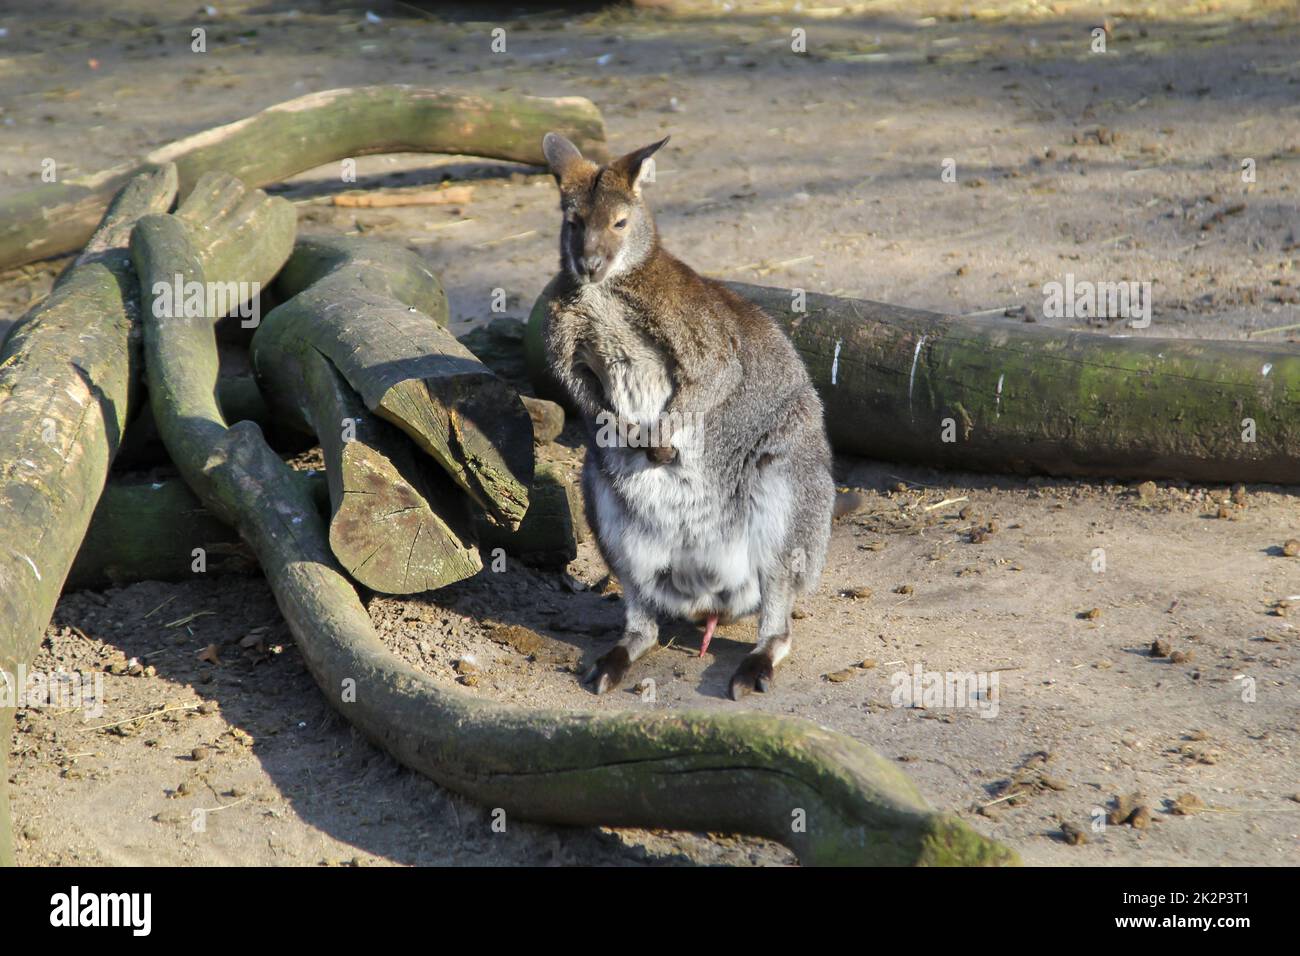 Shot of a kangaruu in front of tree stumps. Stock Photo